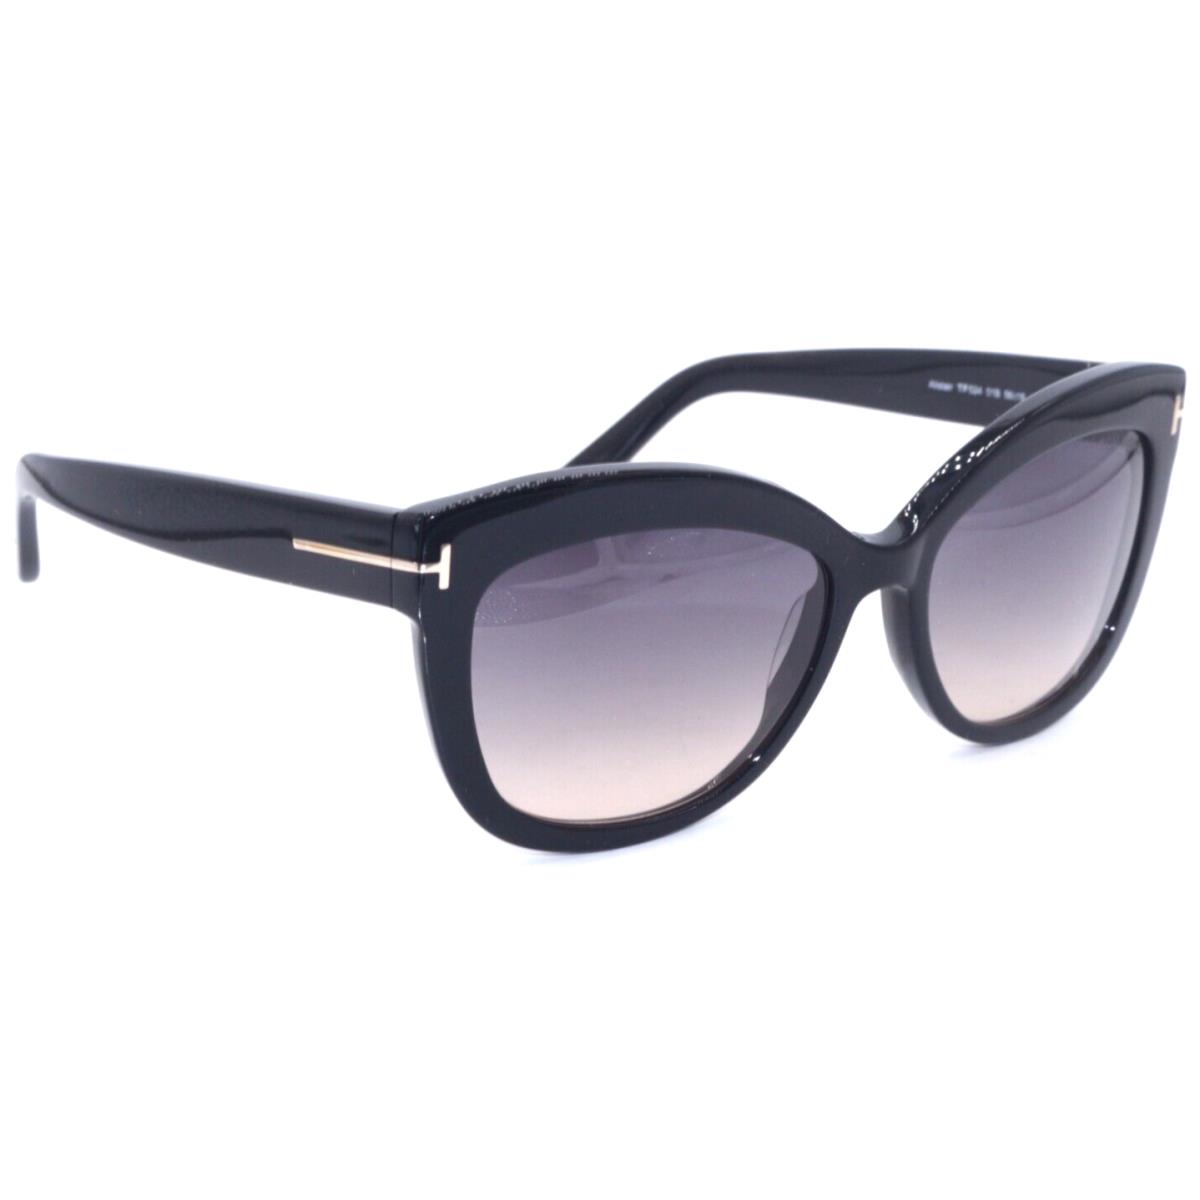 Tom Ford sunglasses  - Frame: Black, Lens: GREY 0